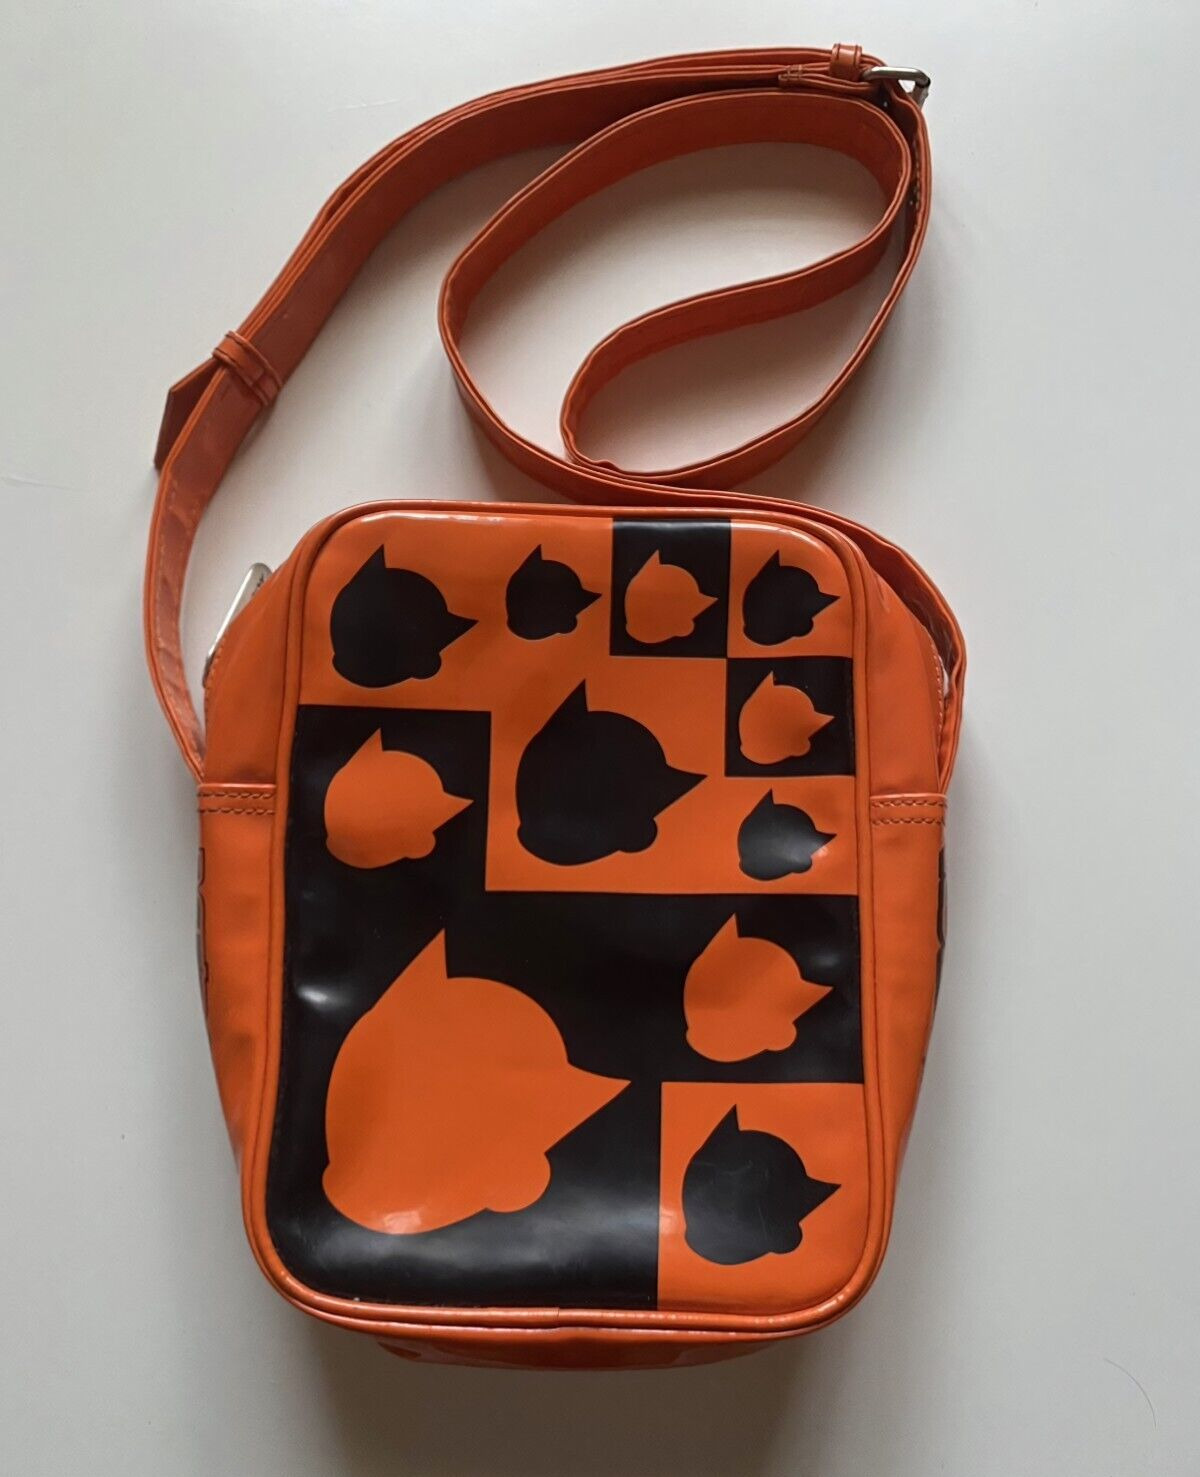 Rare Vintage Astro Boy Messenger Bag - A Collector's Must-Have